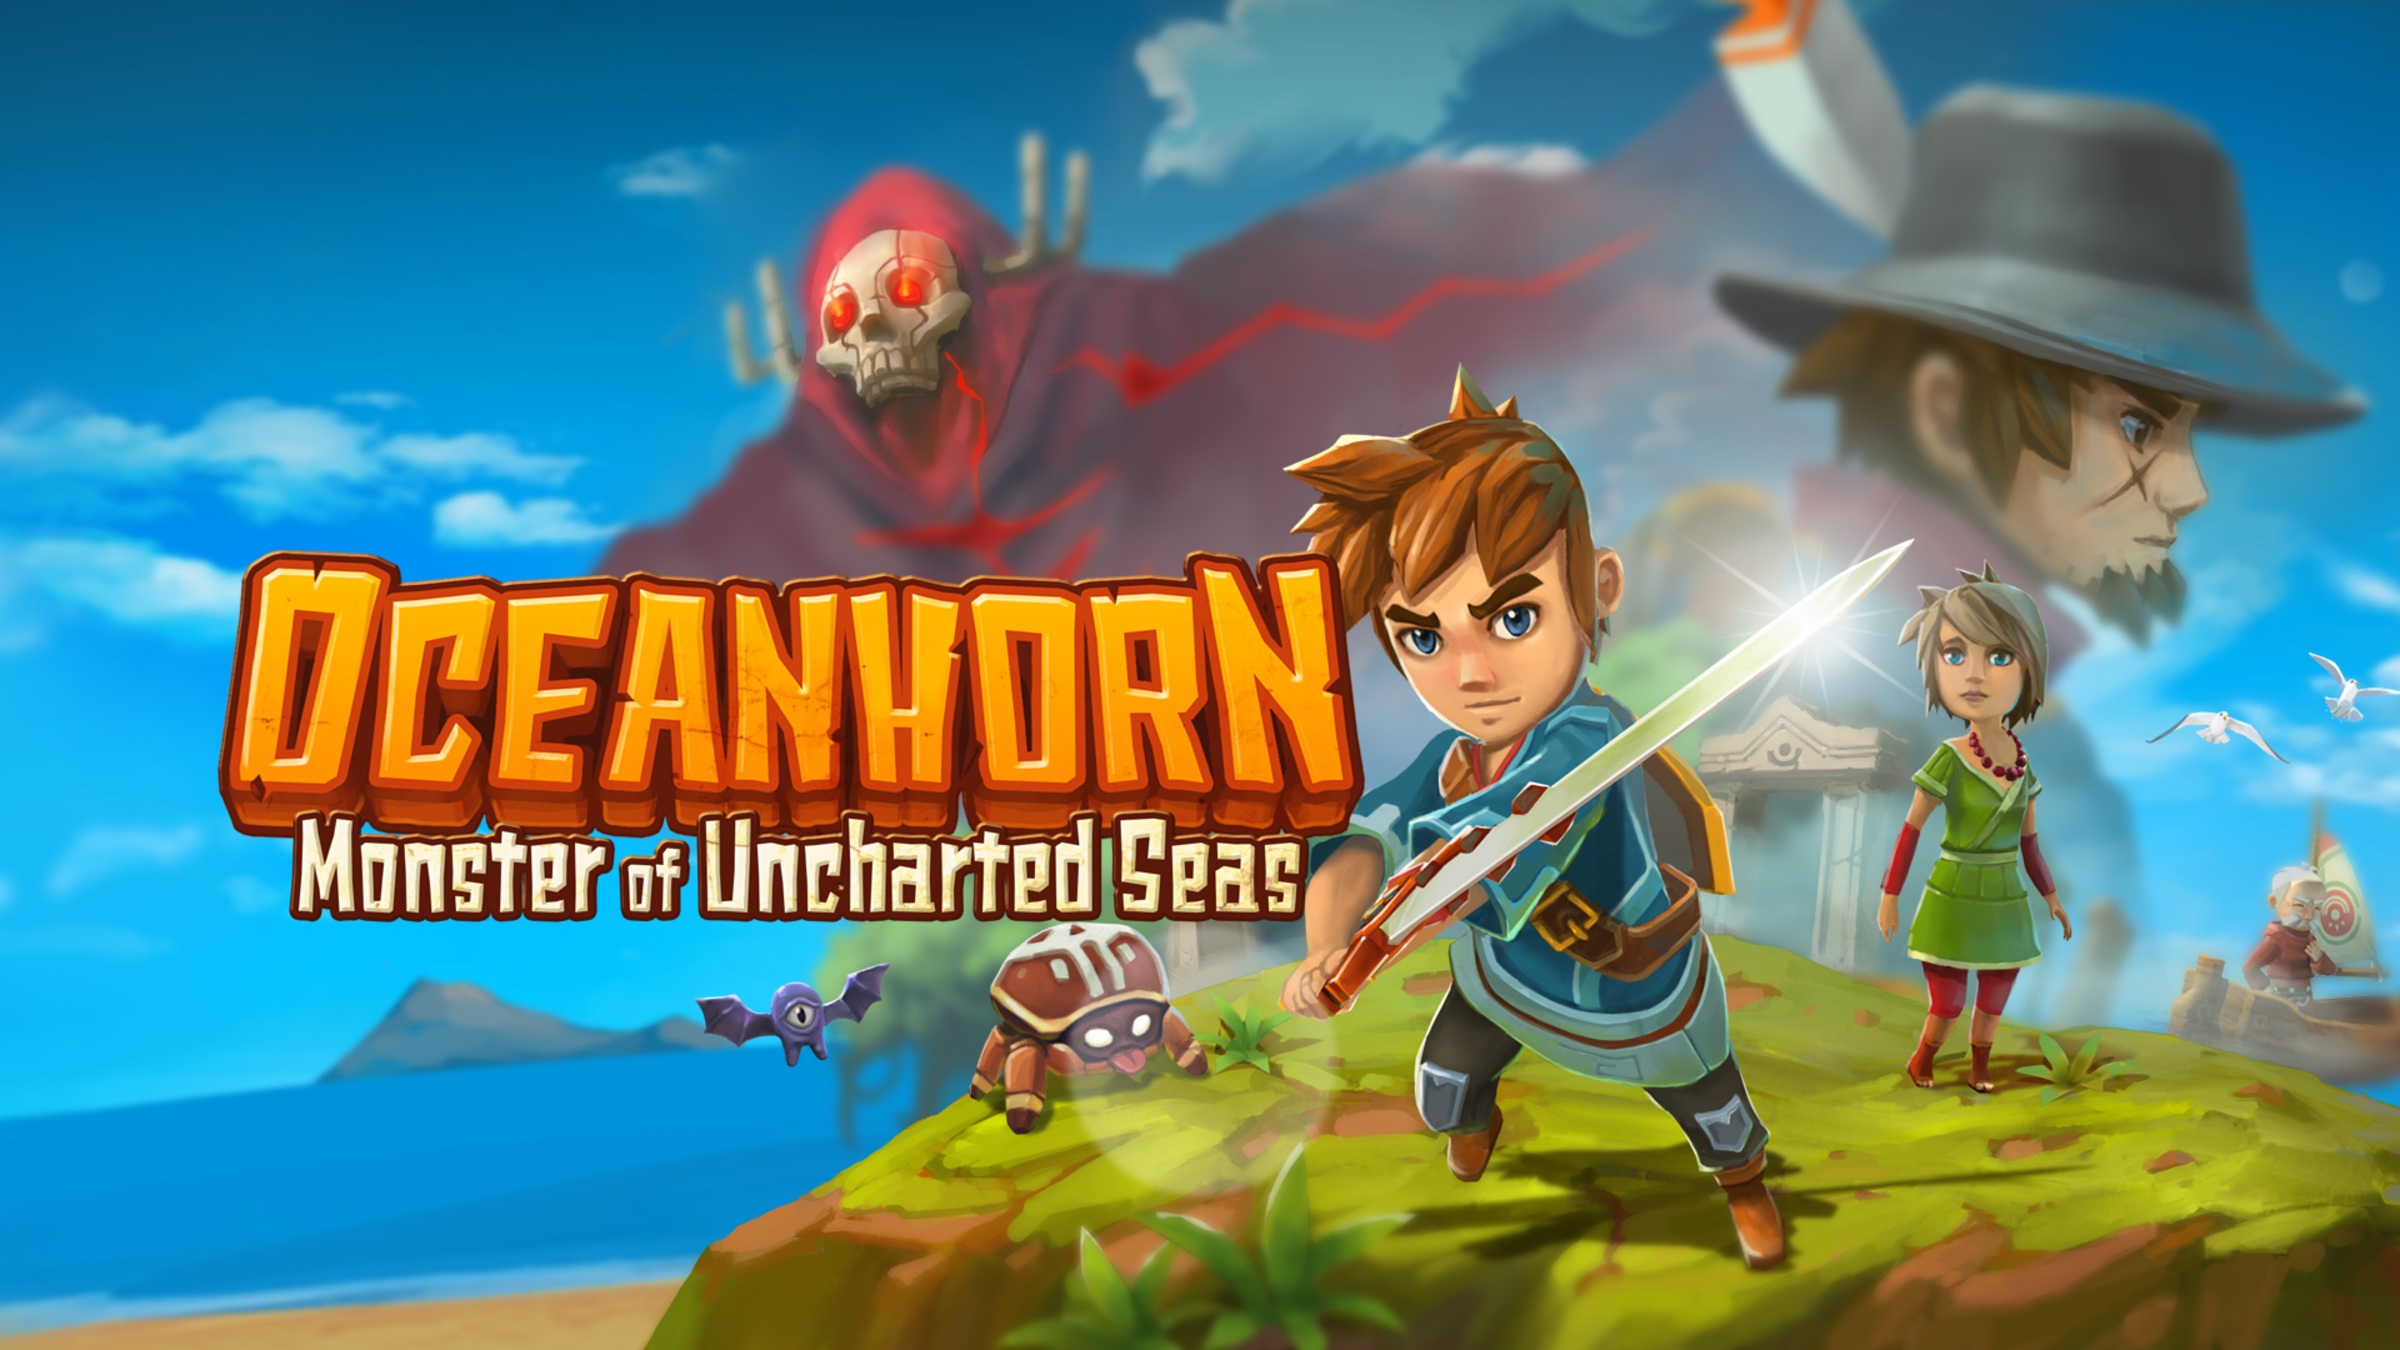 Oceanhorn - Monster of Uncharted Seas for Nintendo Switch - Nintendo Official Site